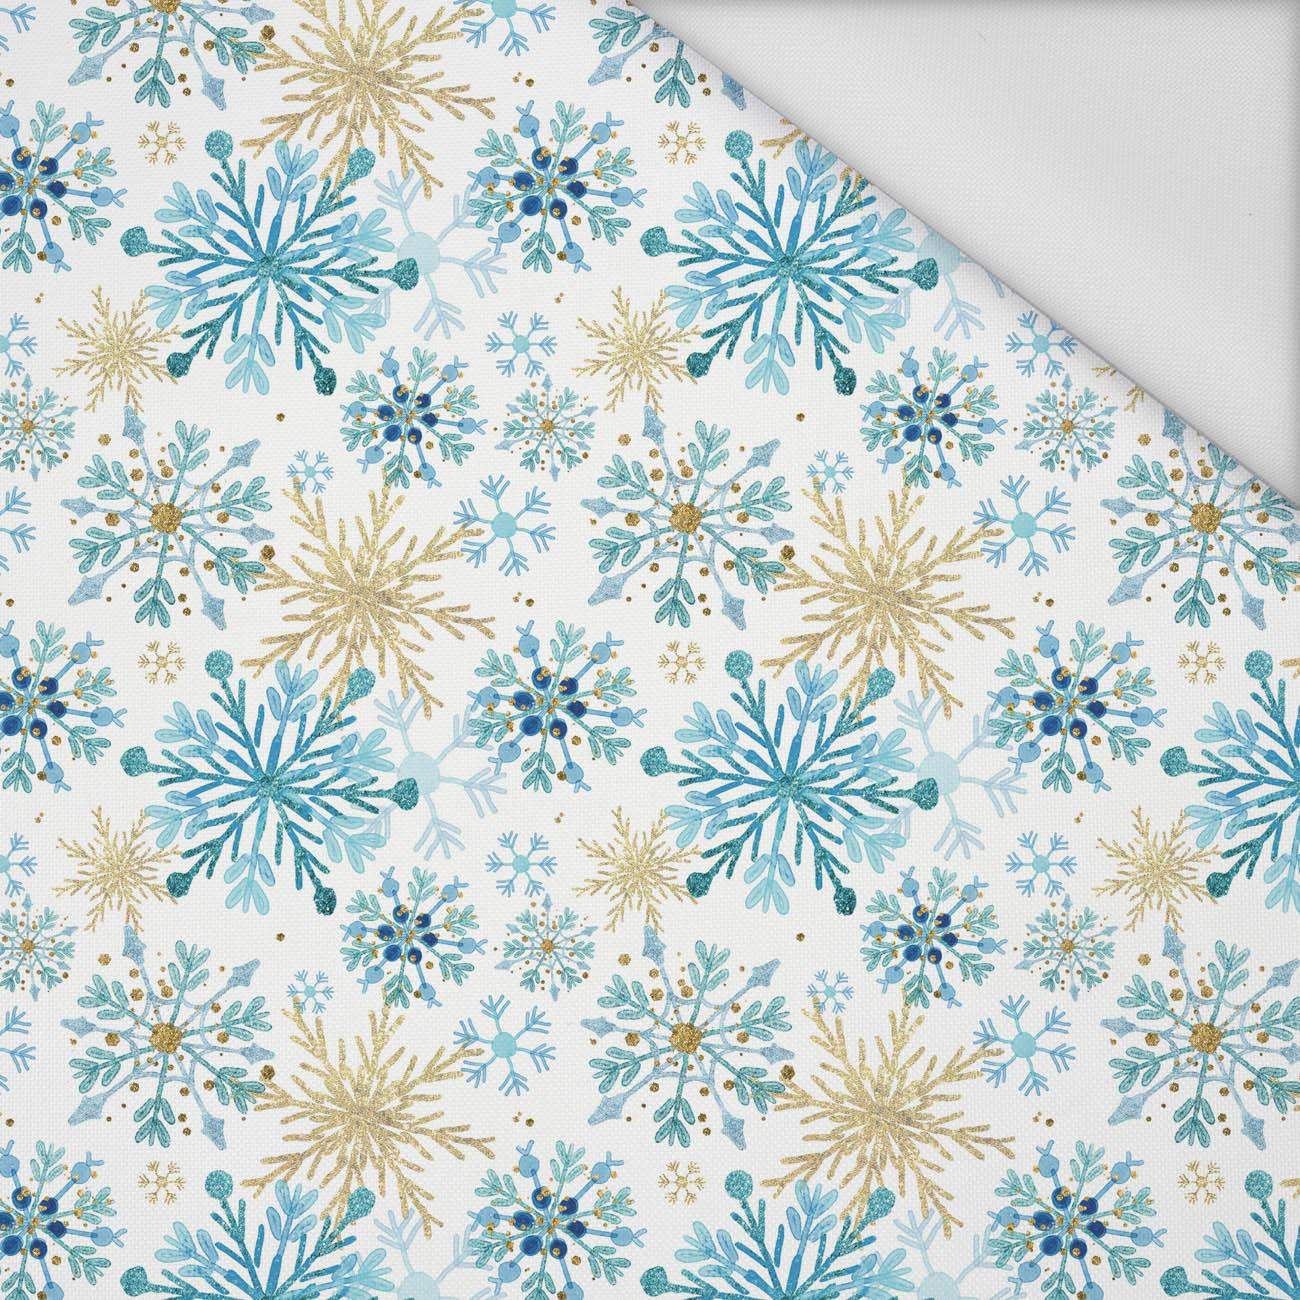 BLUE SNOWFLAKES  - Waterproof woven fabric